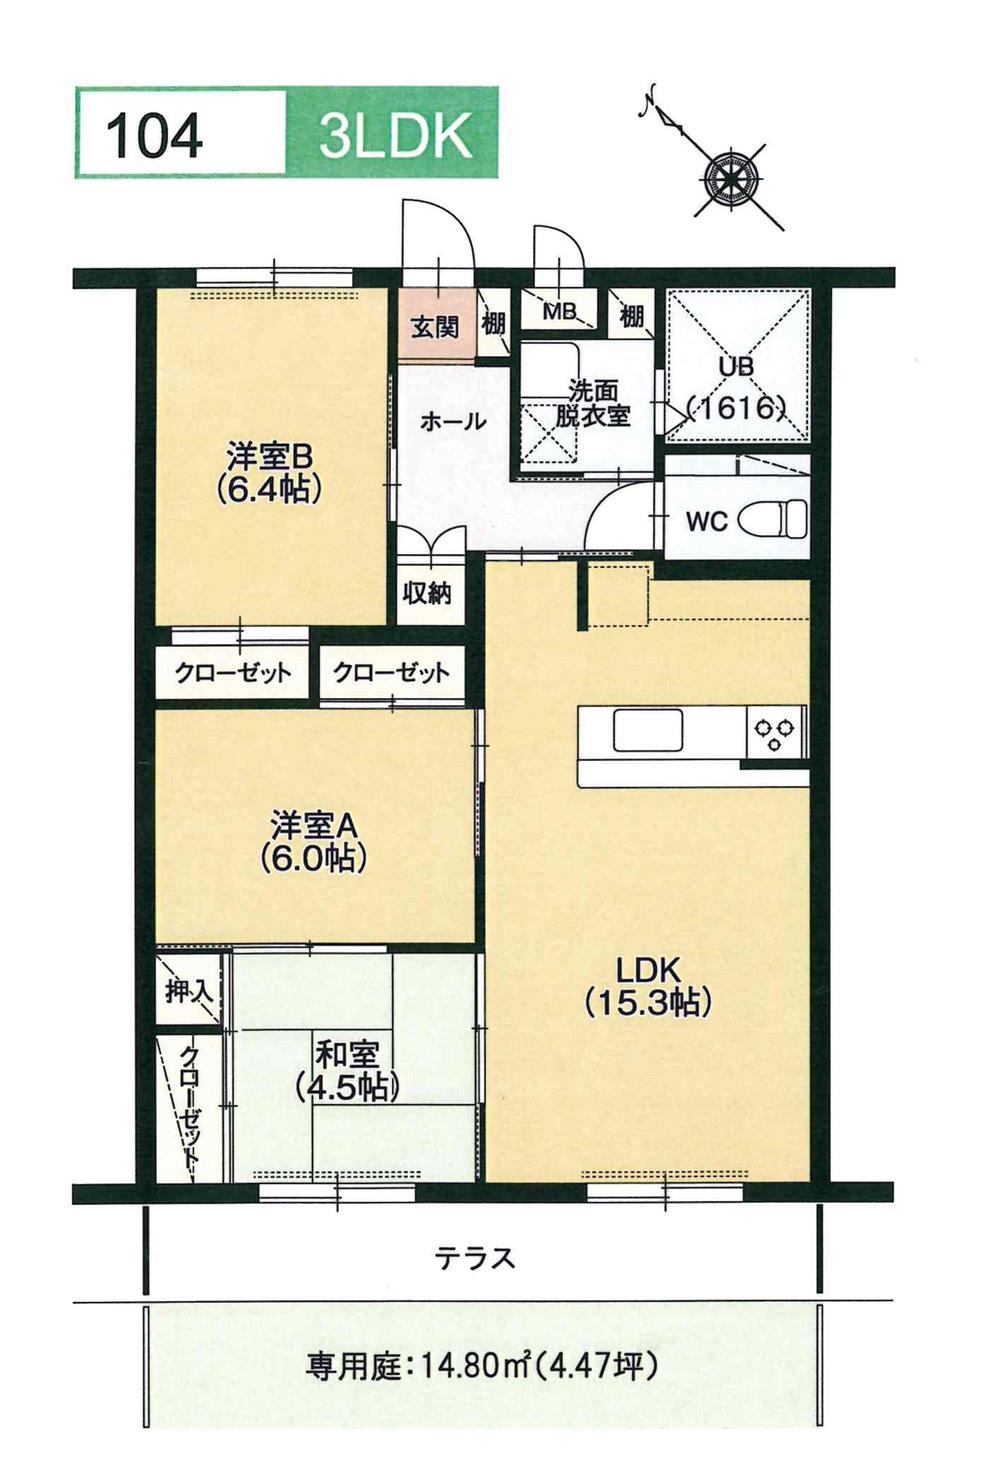 Floor plan. 3LDK, Price 12 million yen, Footprint 74 sq m